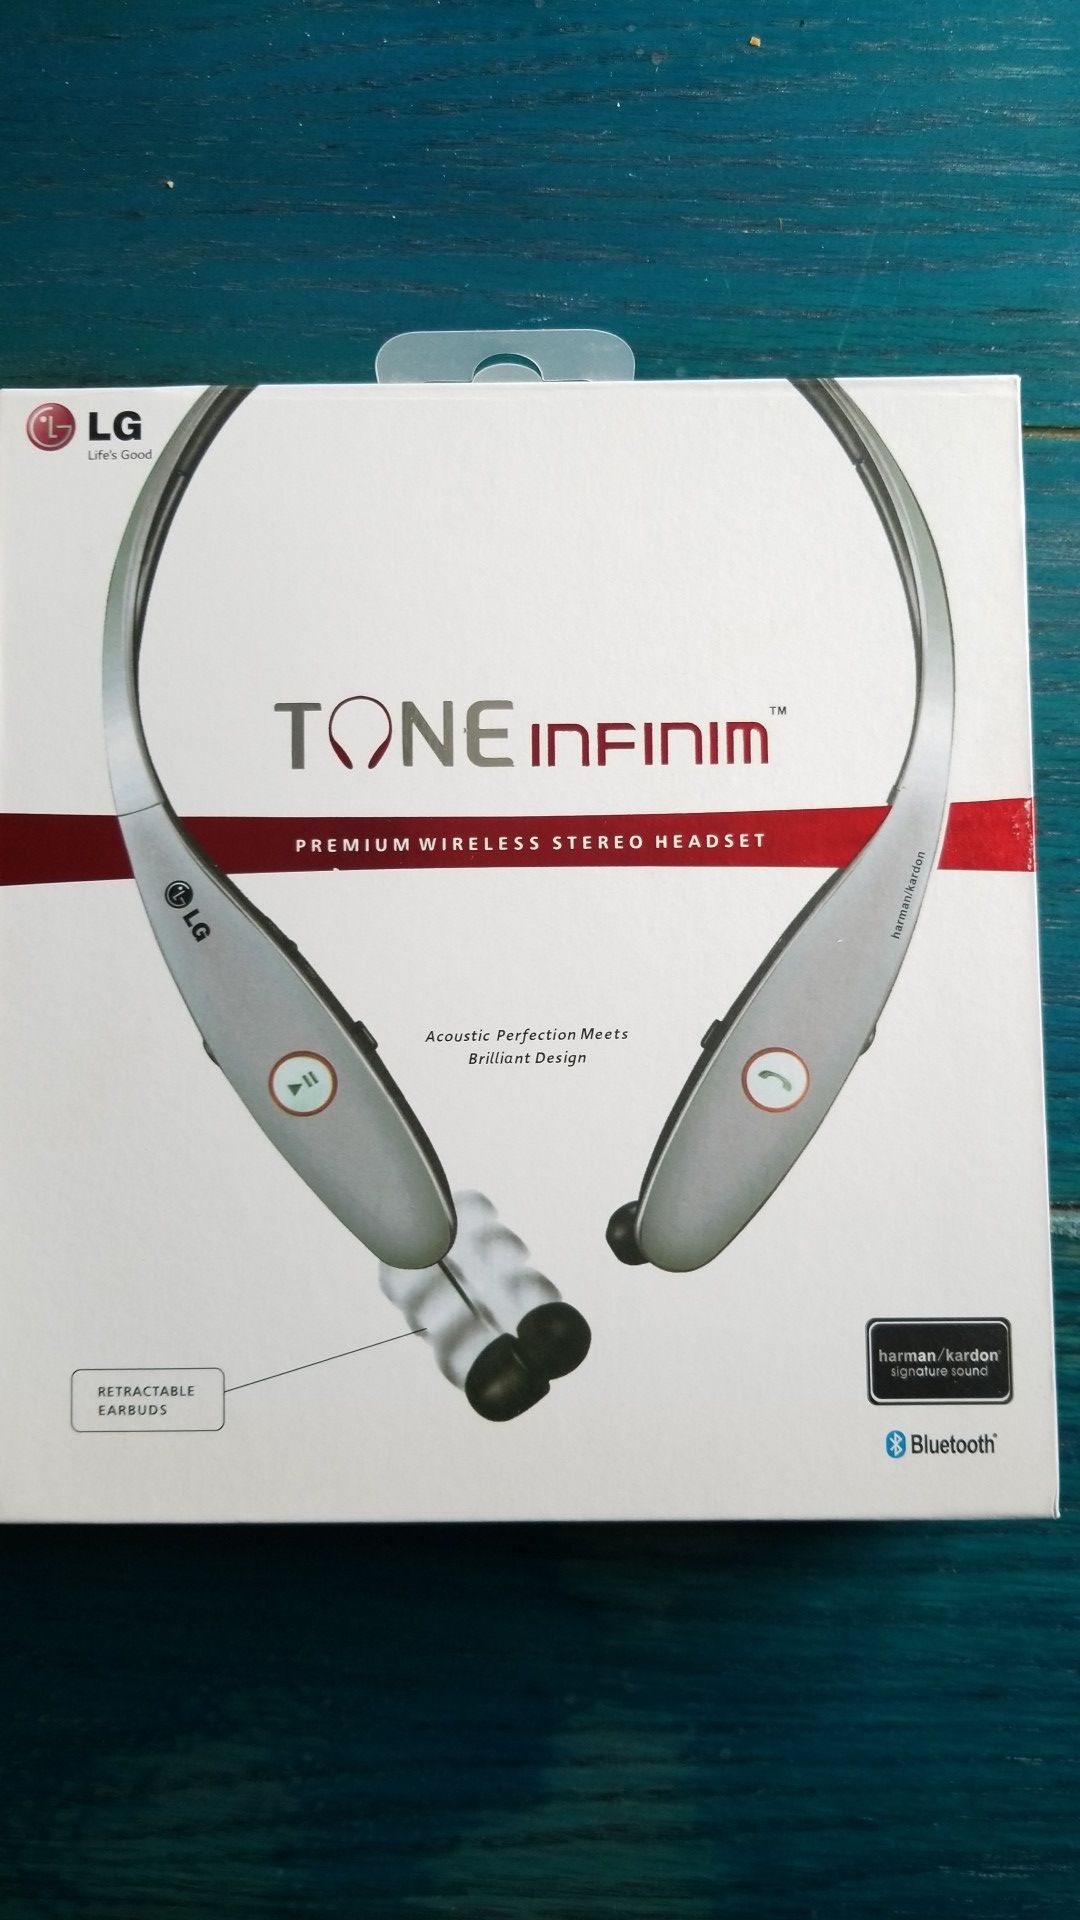 LG Tone infinim Bluetooth wireless headset